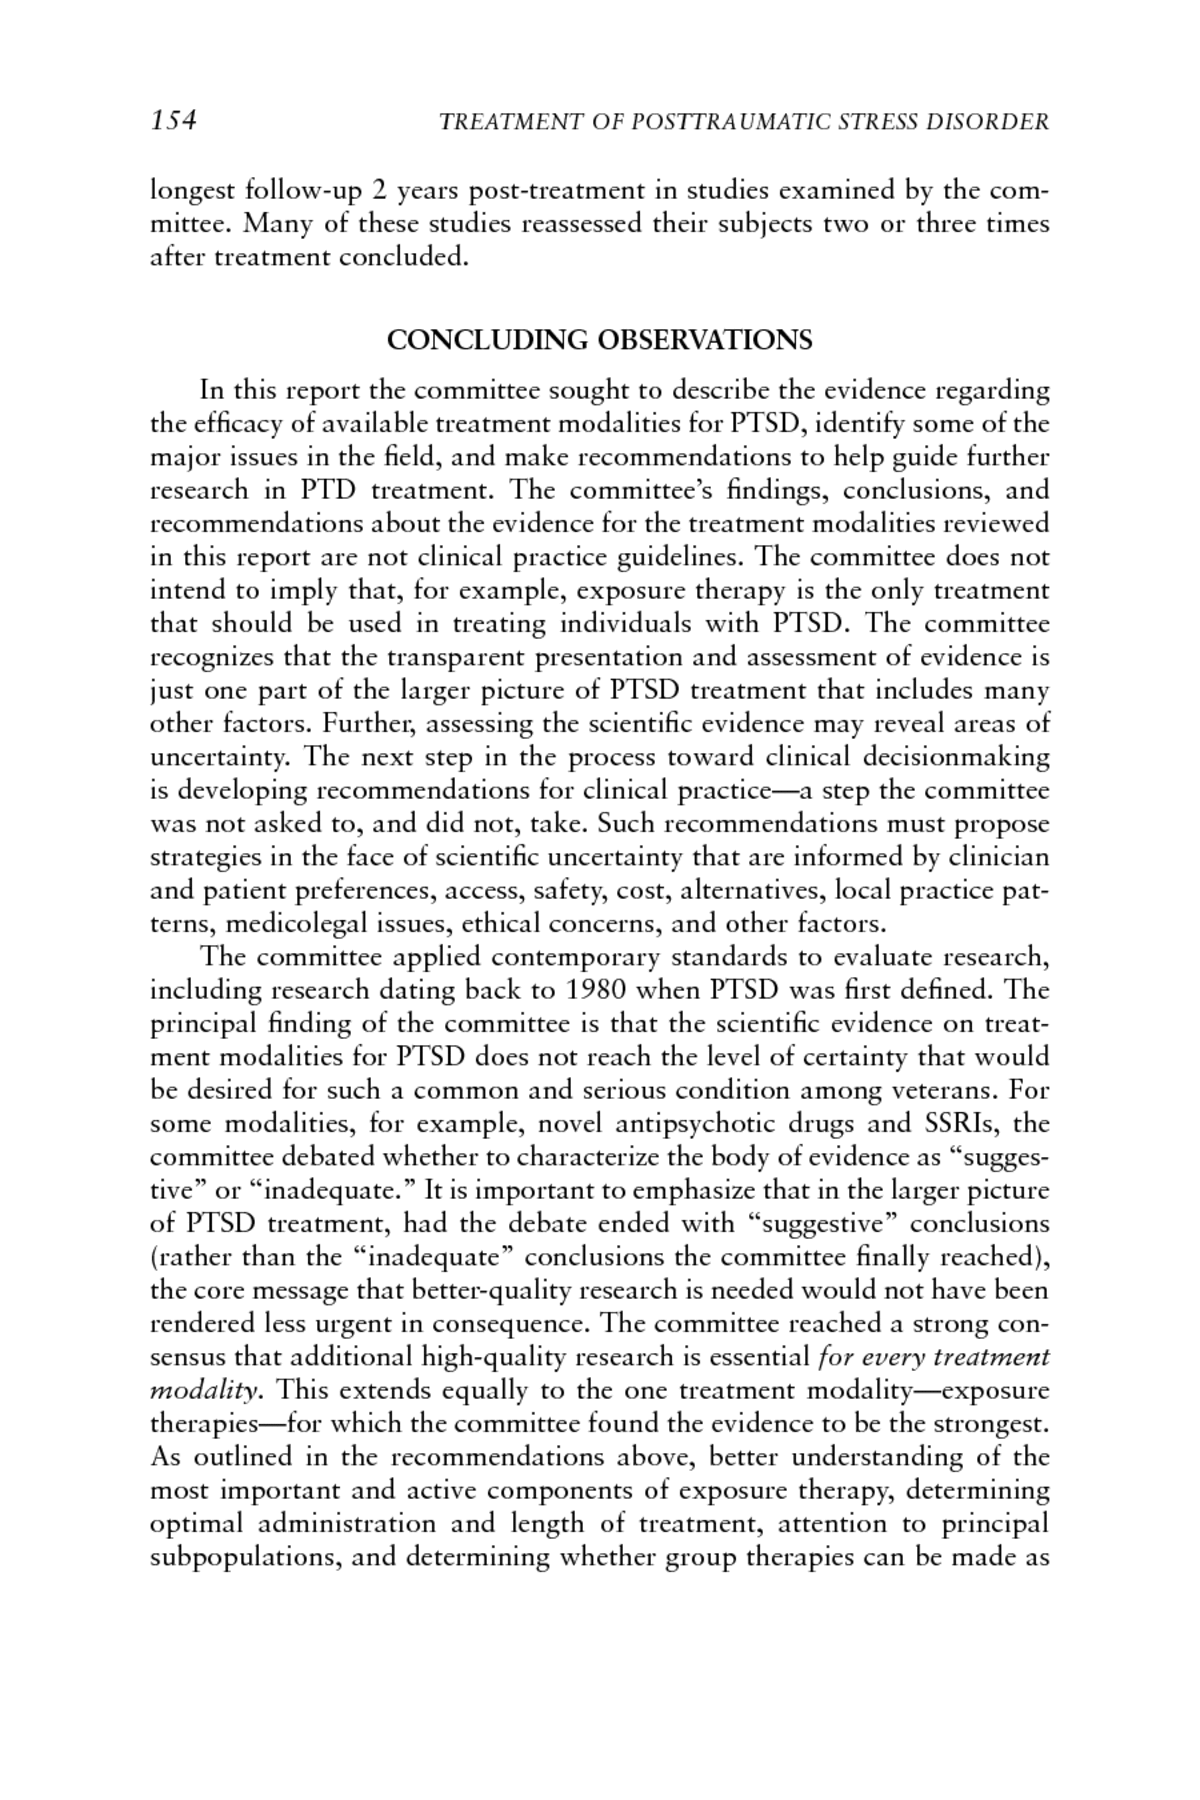 apa research paper on ptsd